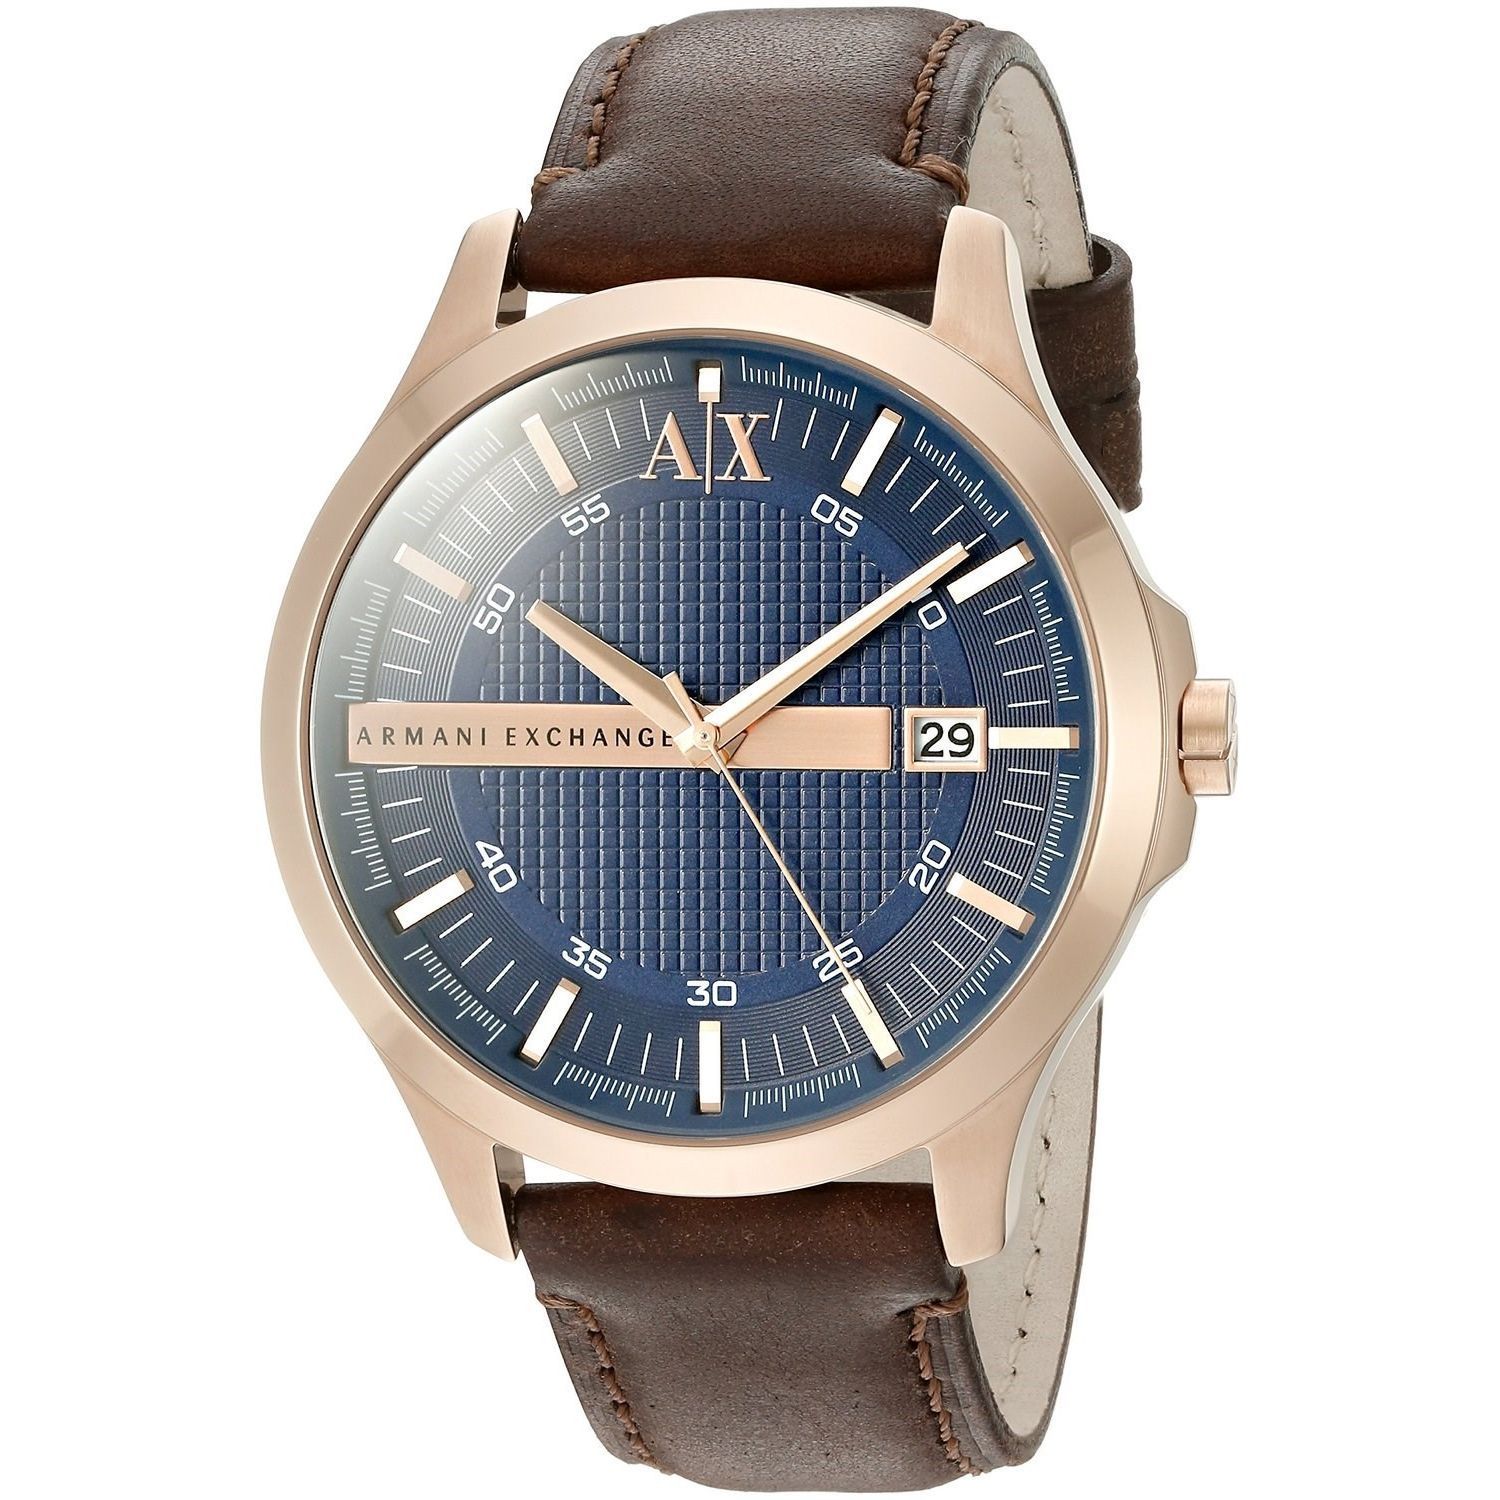 armani exchange men's brown leather strap watch